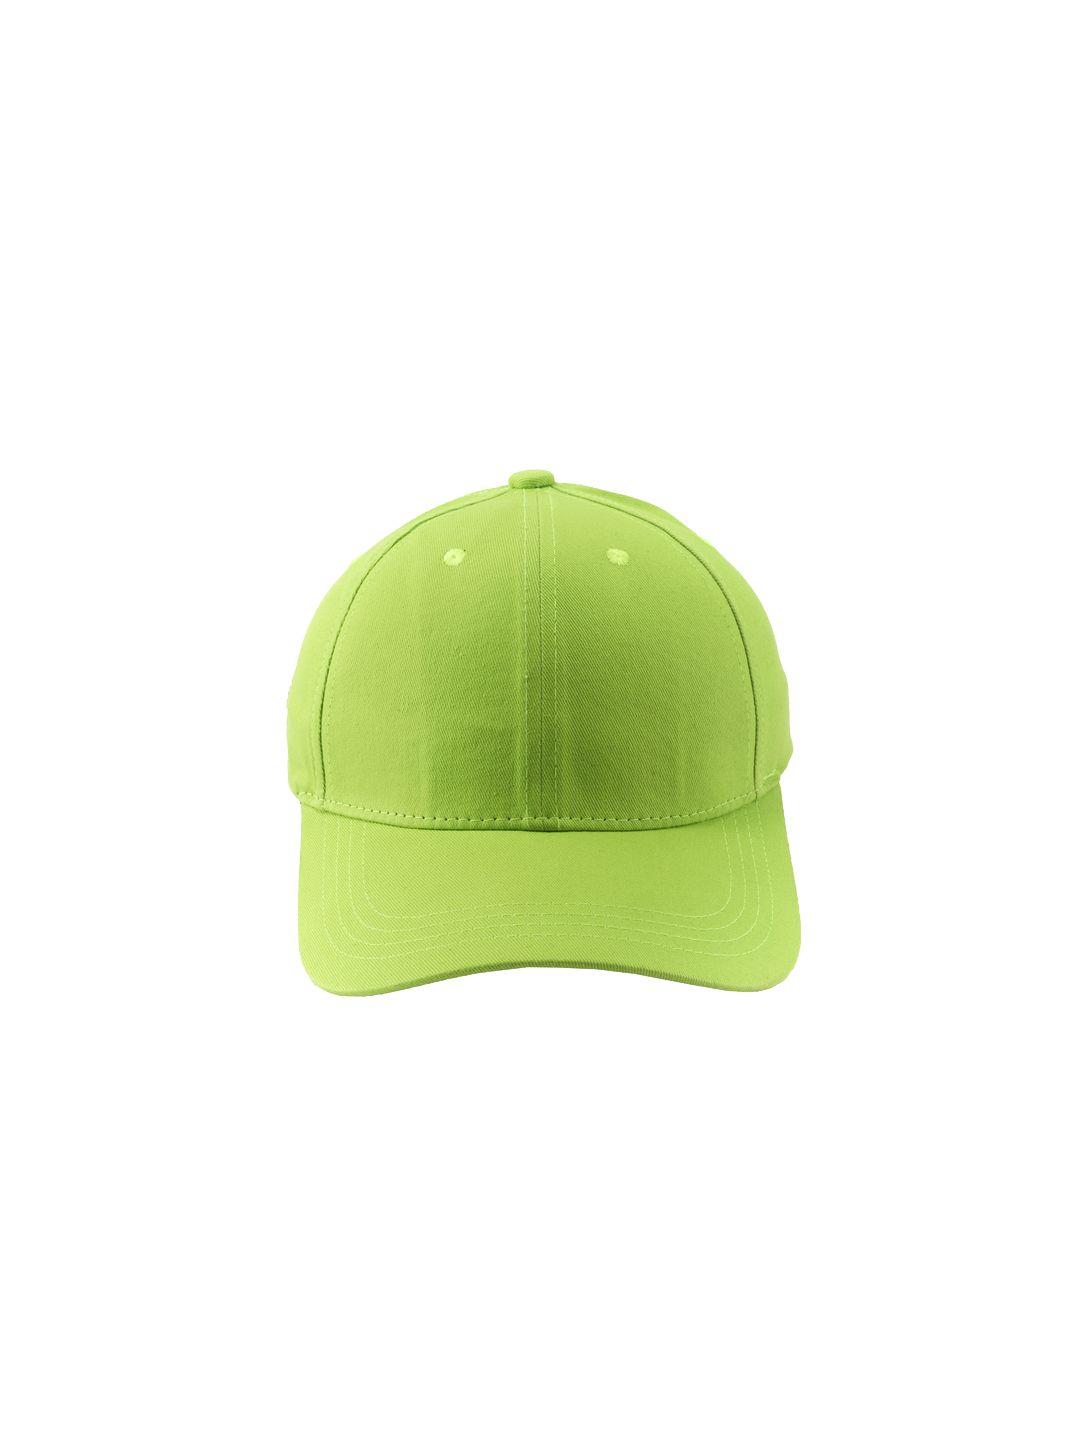 cap shap unisex lime green solid baseball cap